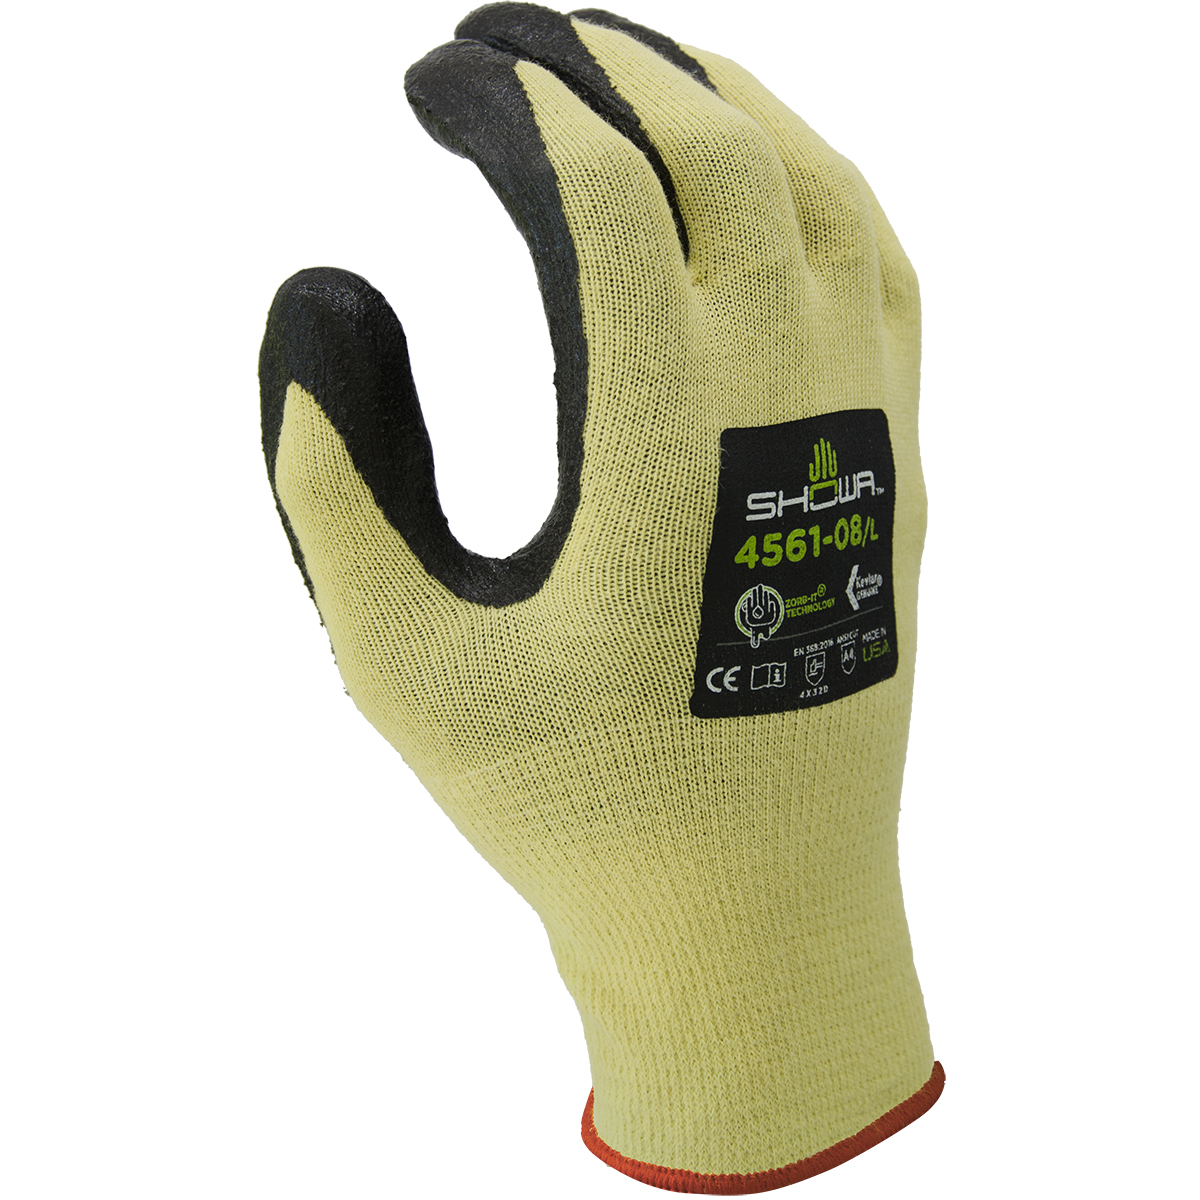 Cut resistant, sponge nitrile palm w/Zorb-IT technology, 15 gauge seamless knit made Kevlar®, yellow w/black dip,  ANSI CUT LEVEL A4/small